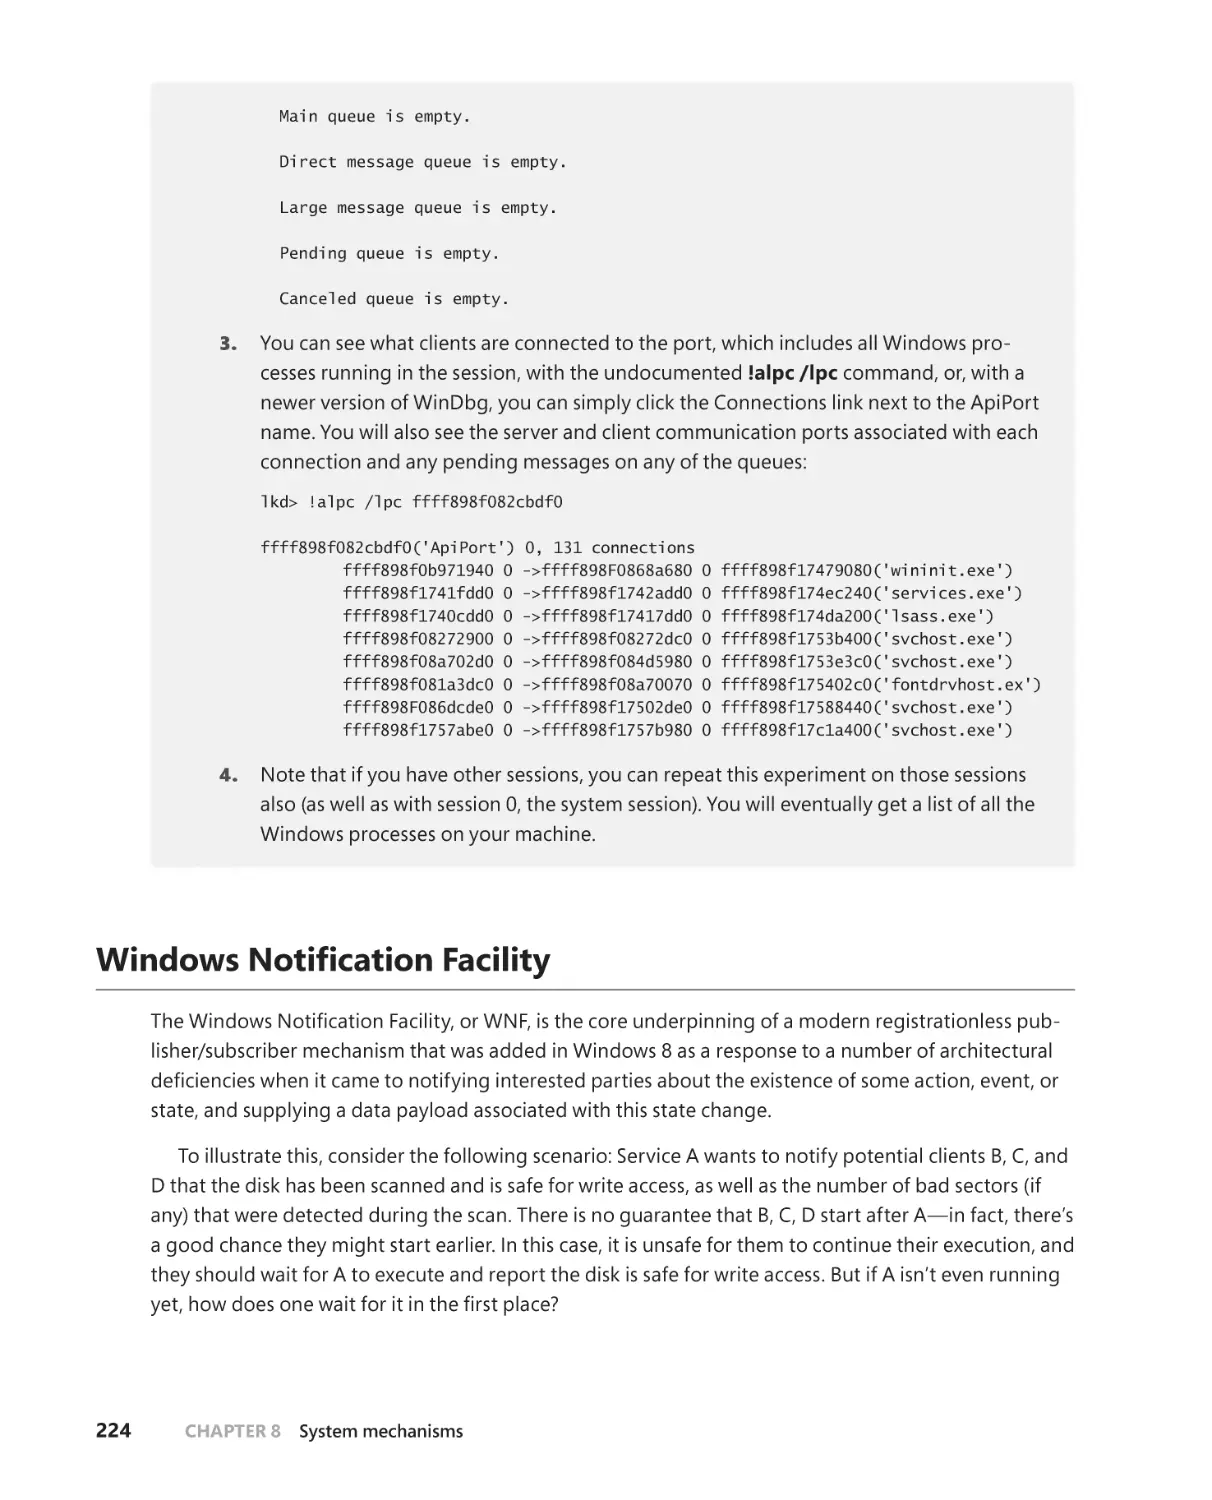 Windows Notification Facility